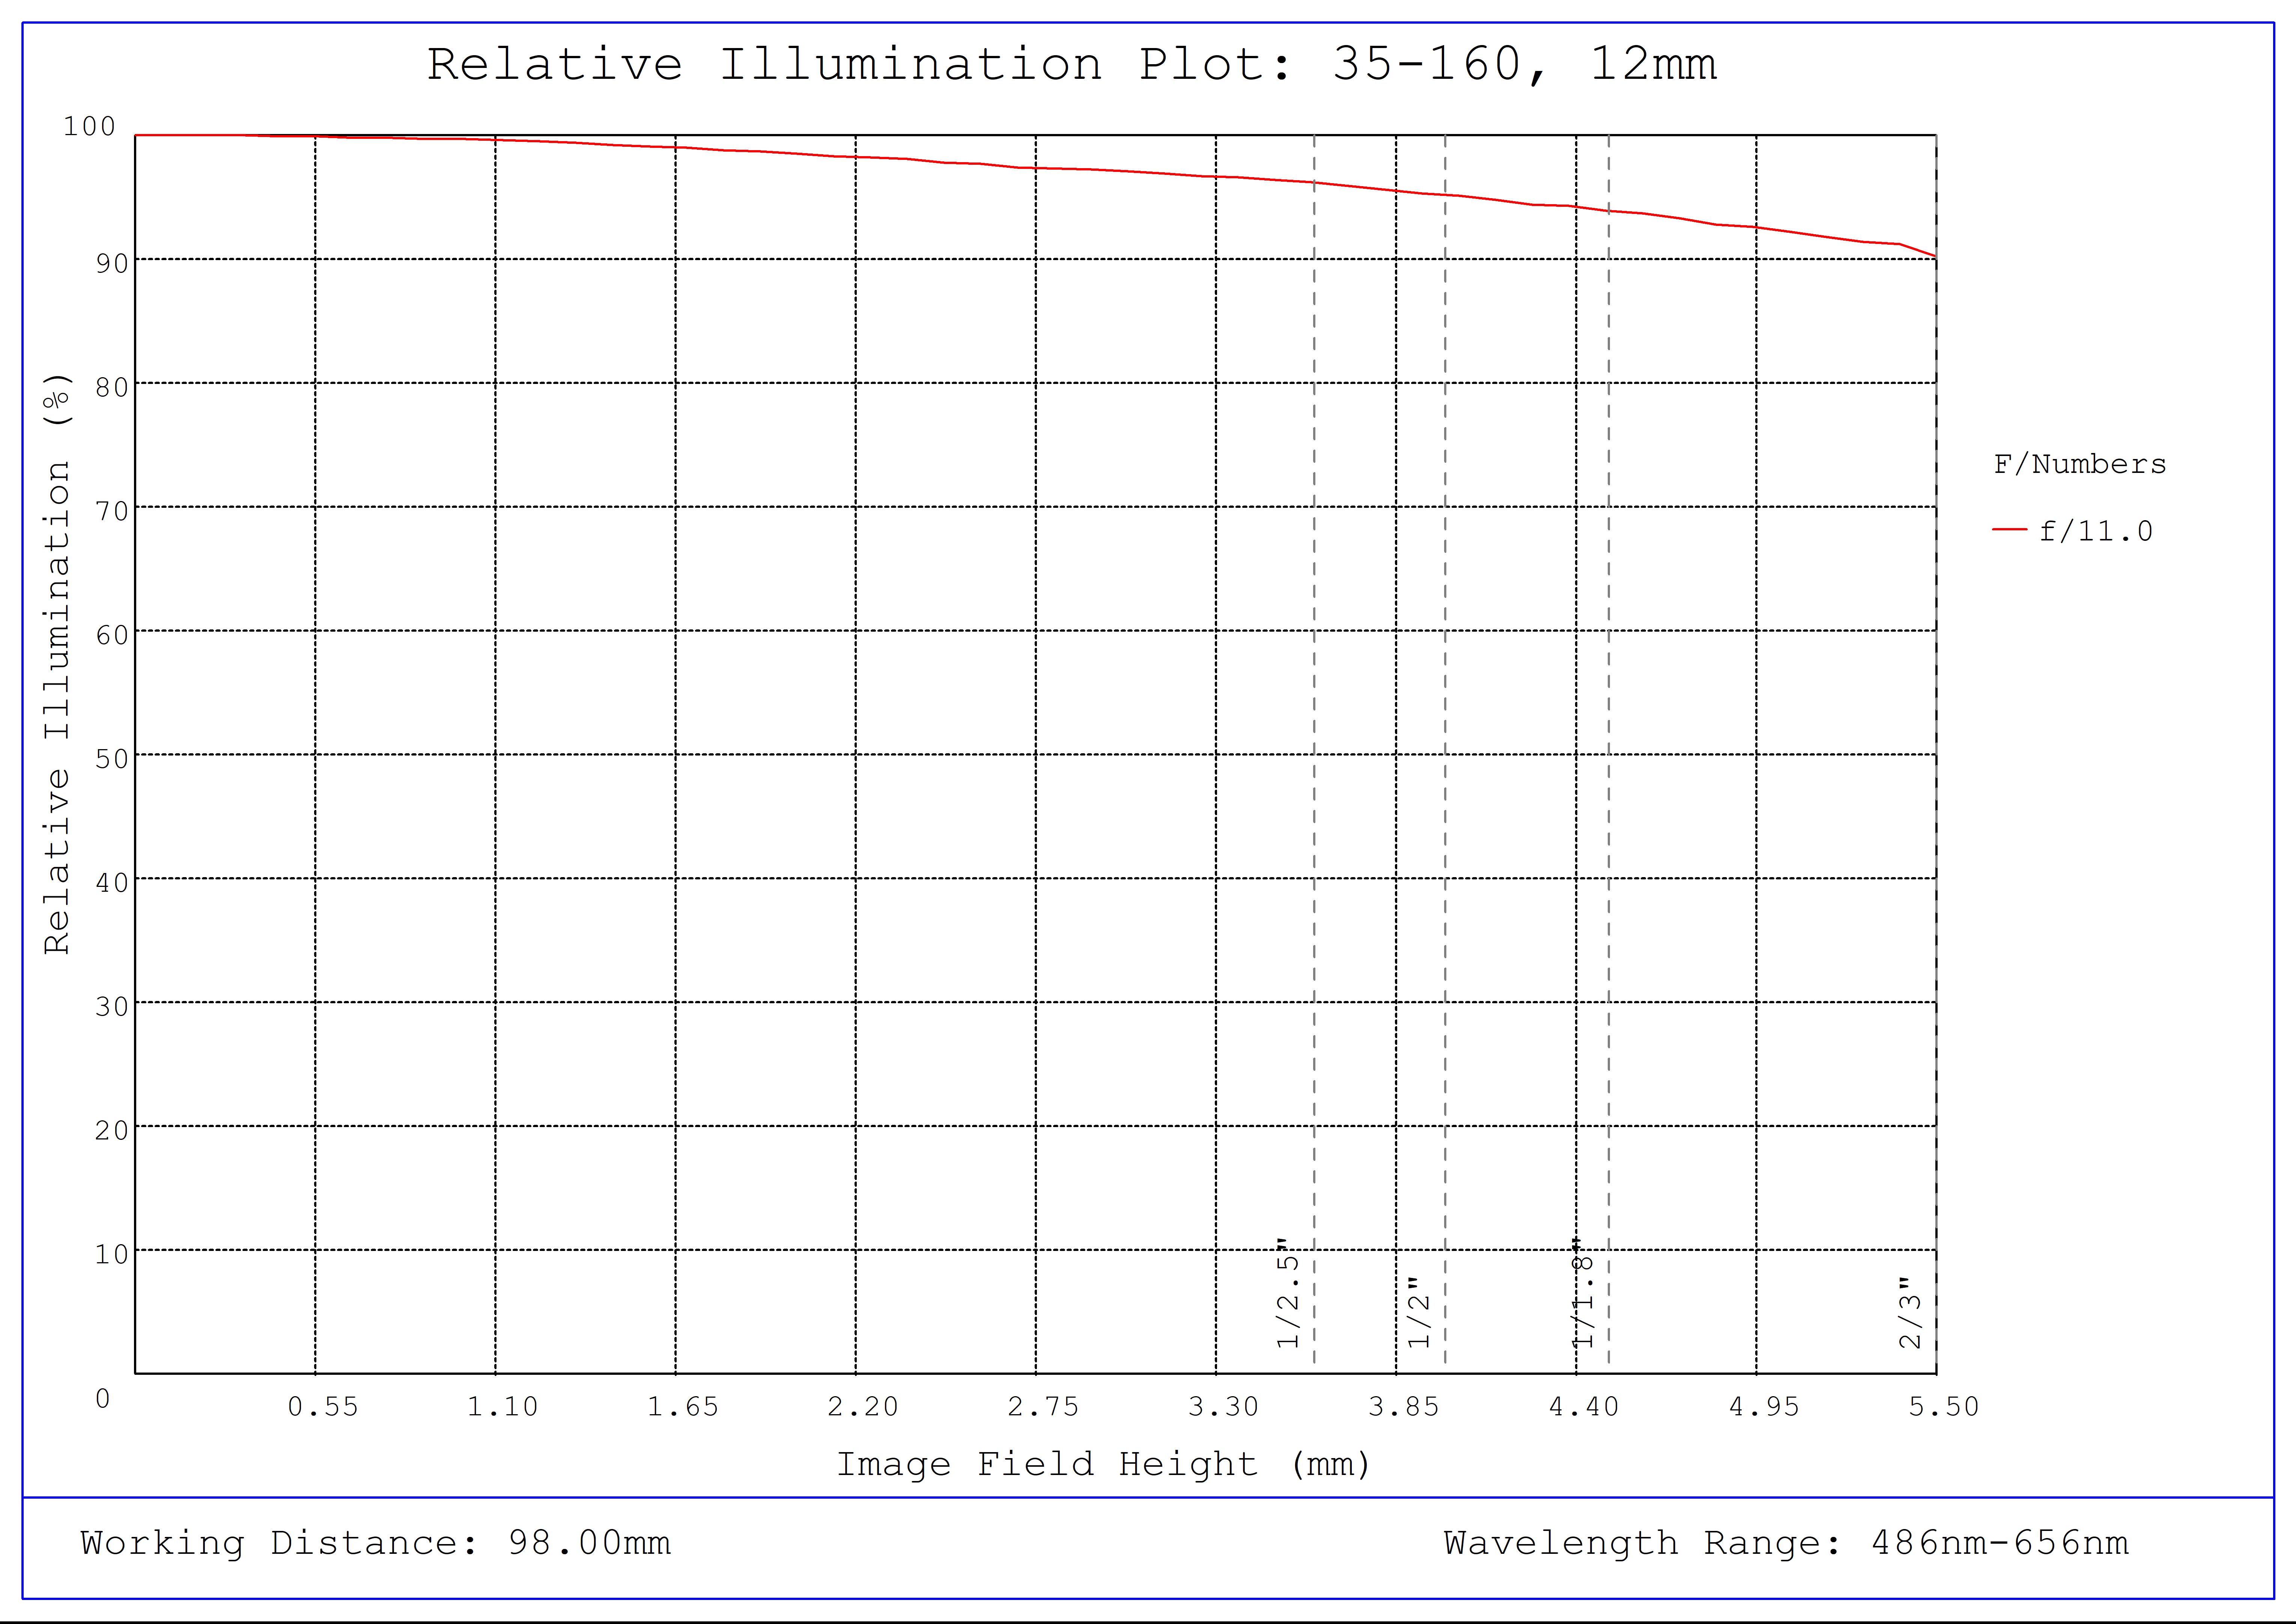 #35-160, 12mm, f/11 Cr Series Fixed Focal Length Lens, Relative Illumination Plot